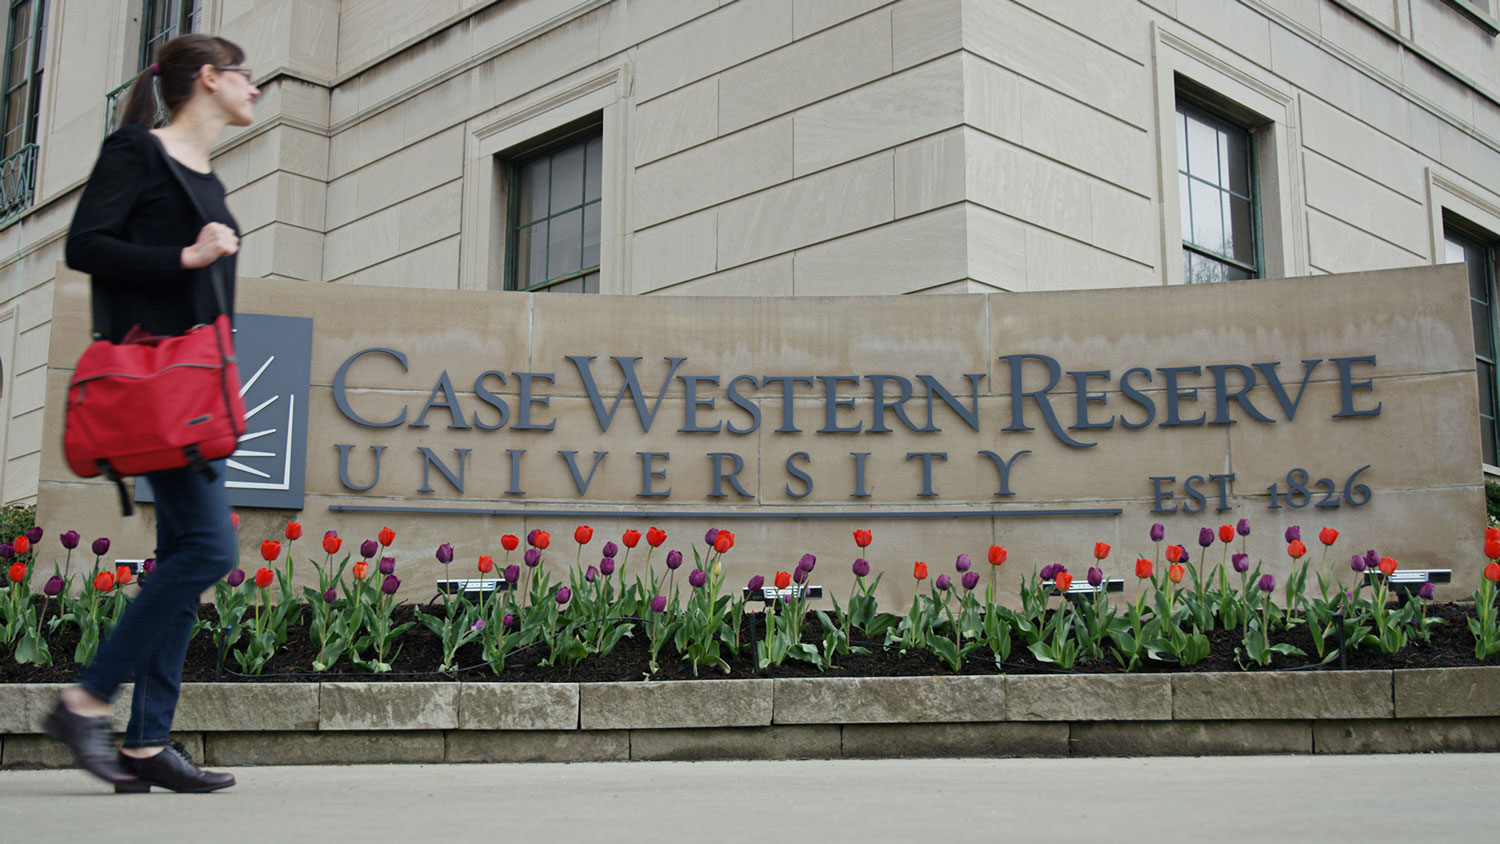 Britt at Case Western Reserve University